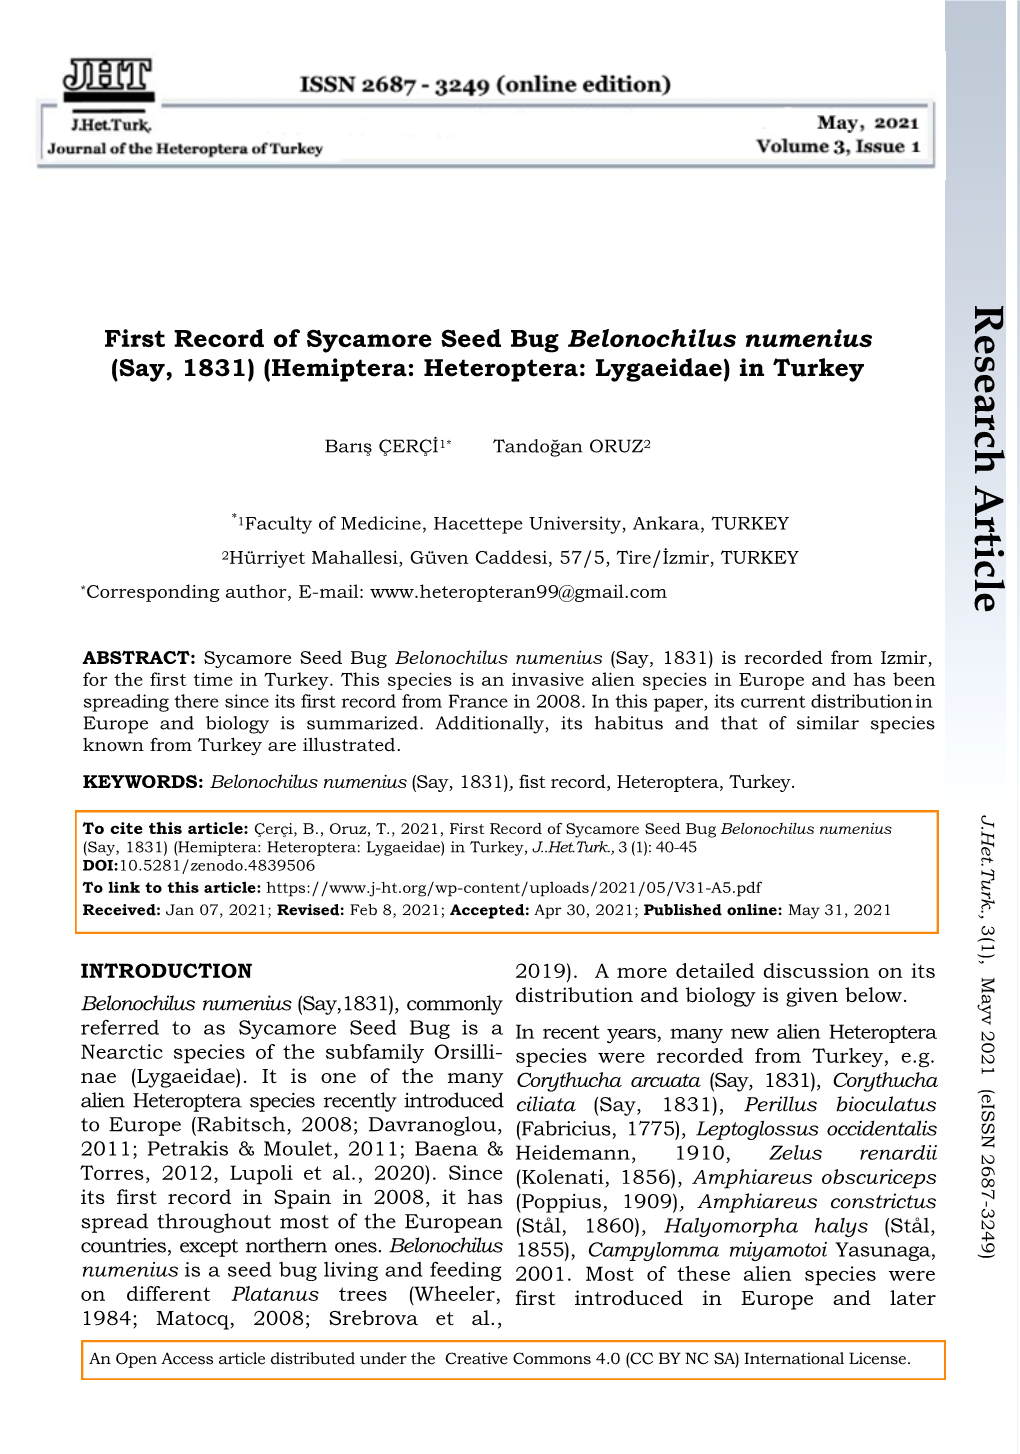 Research Article First Record of Sycamore Seed Bug Belonochilus Numenius (Say, 1831) (Hemiptera: Heteroptera: Lygaeidae) in Turkey